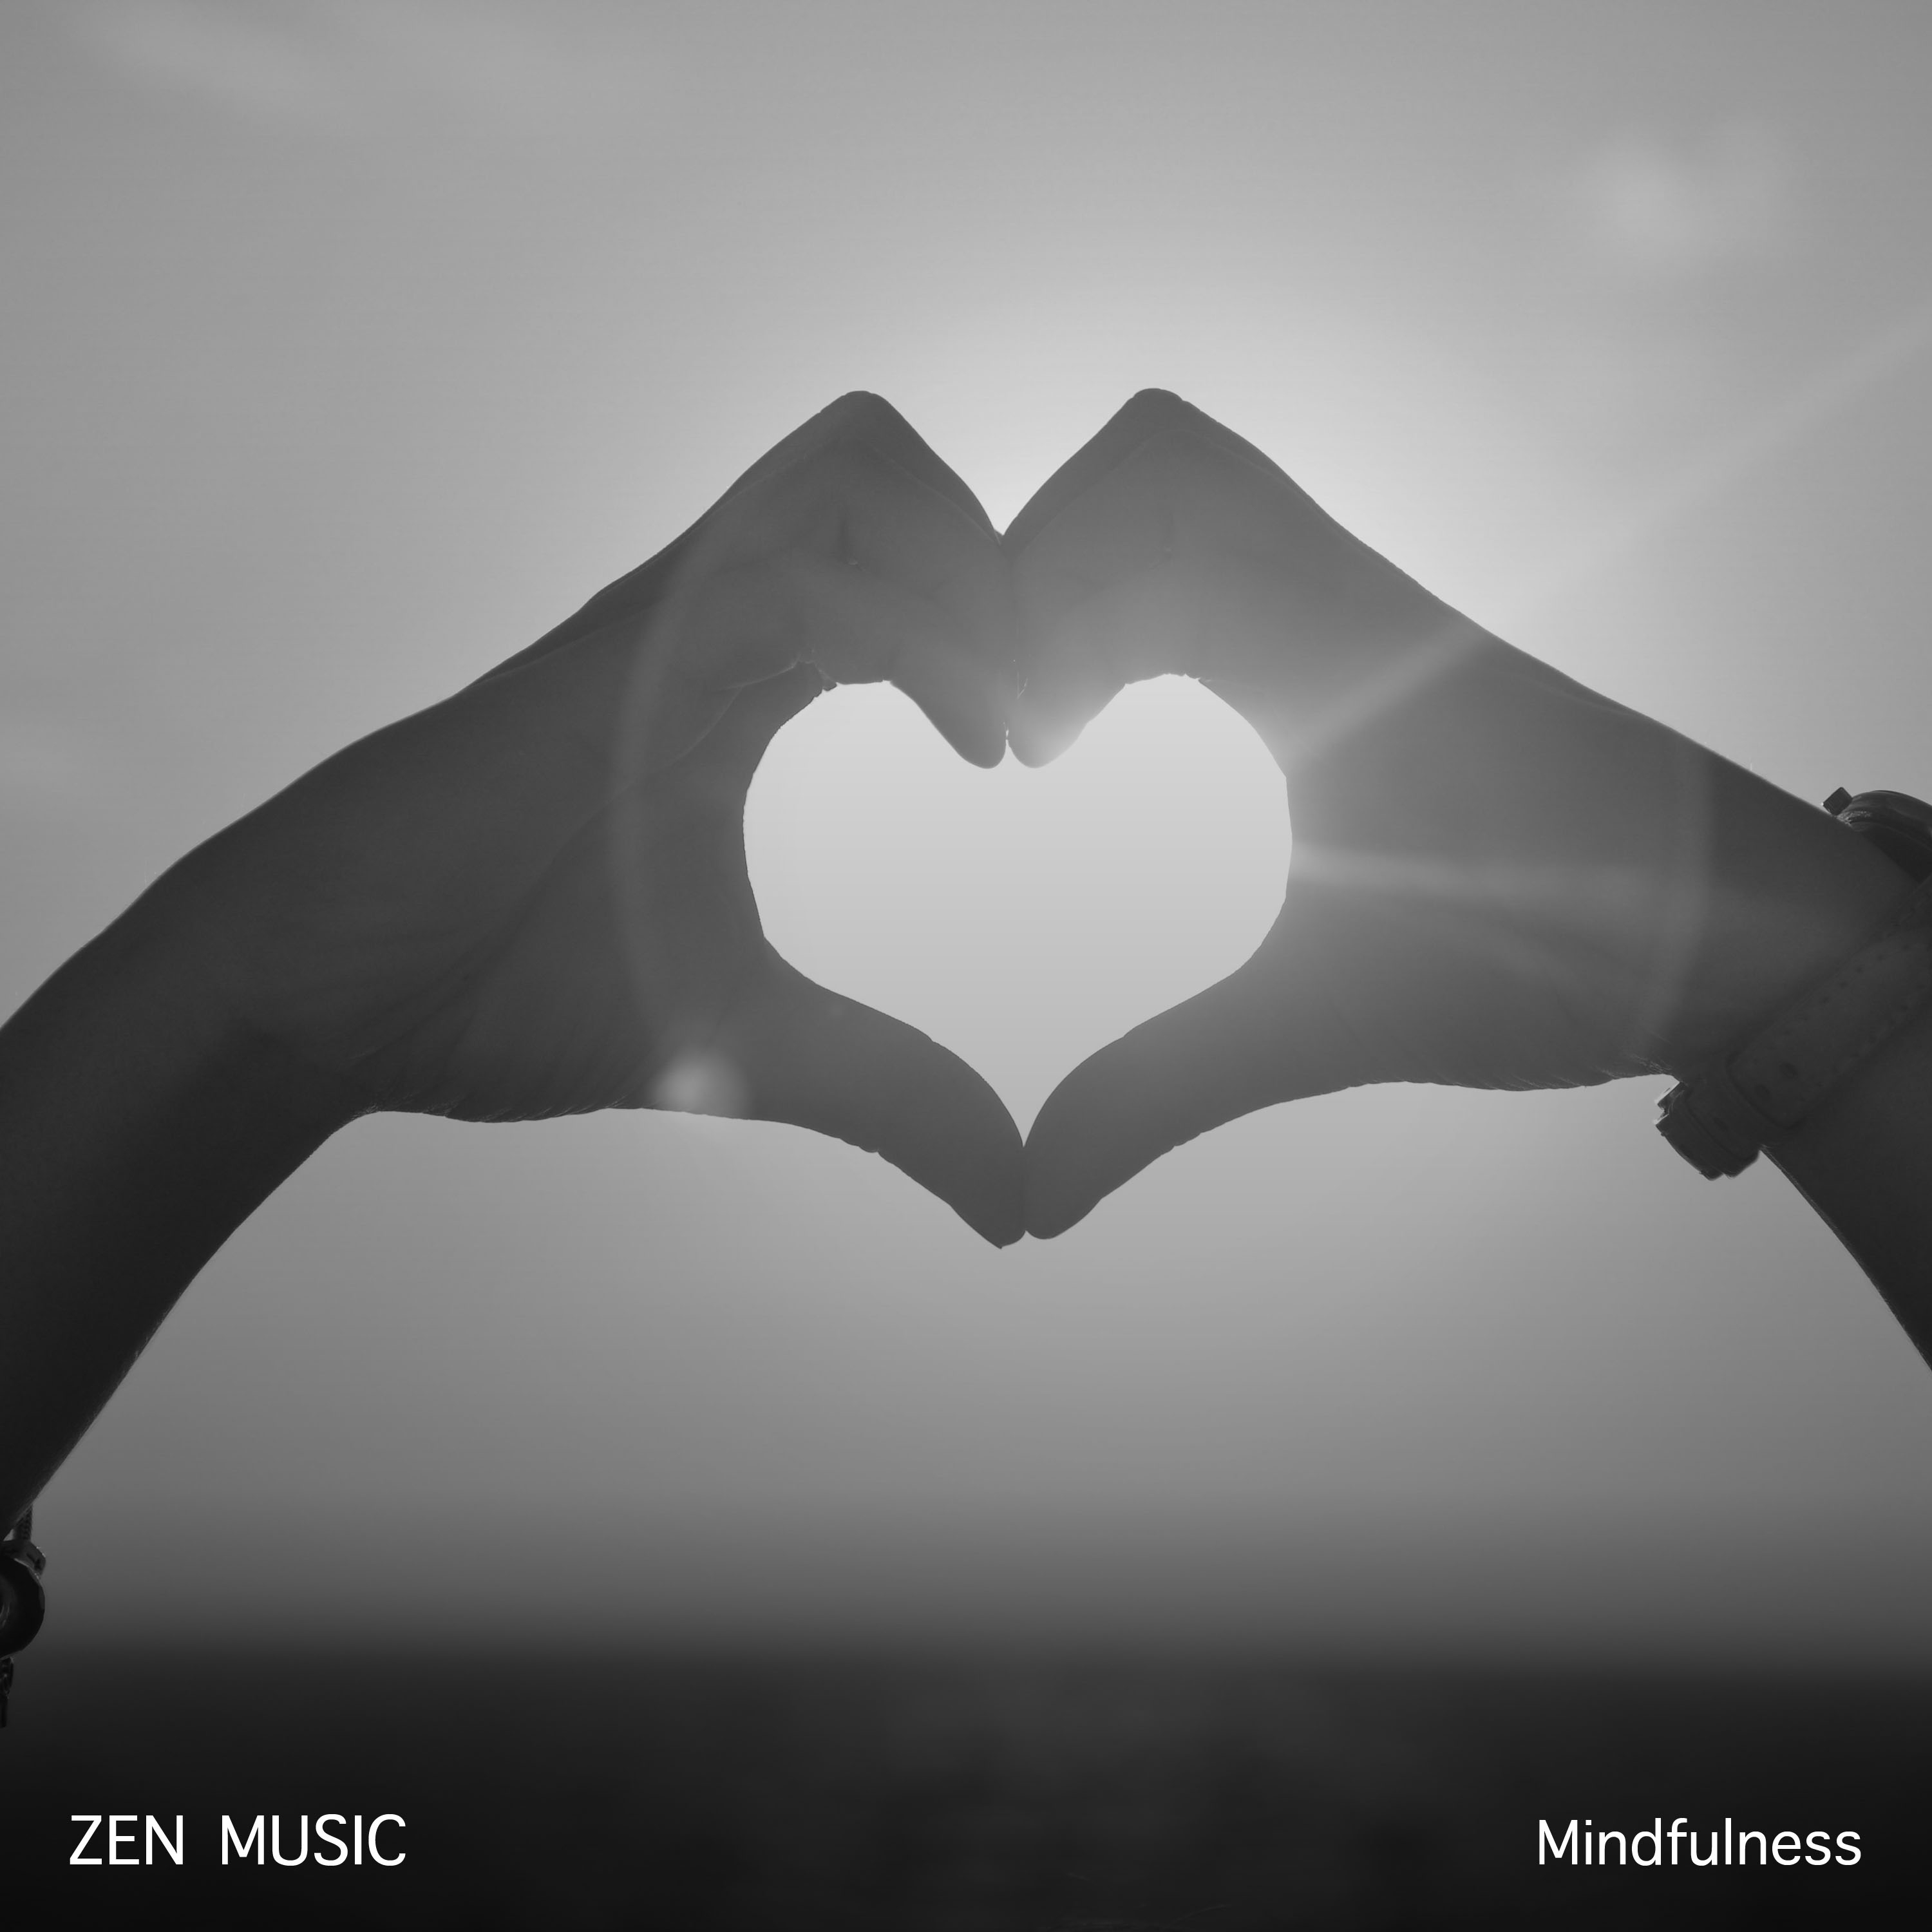 20 Zen Music Garden and Mindfulness Meditation Songs